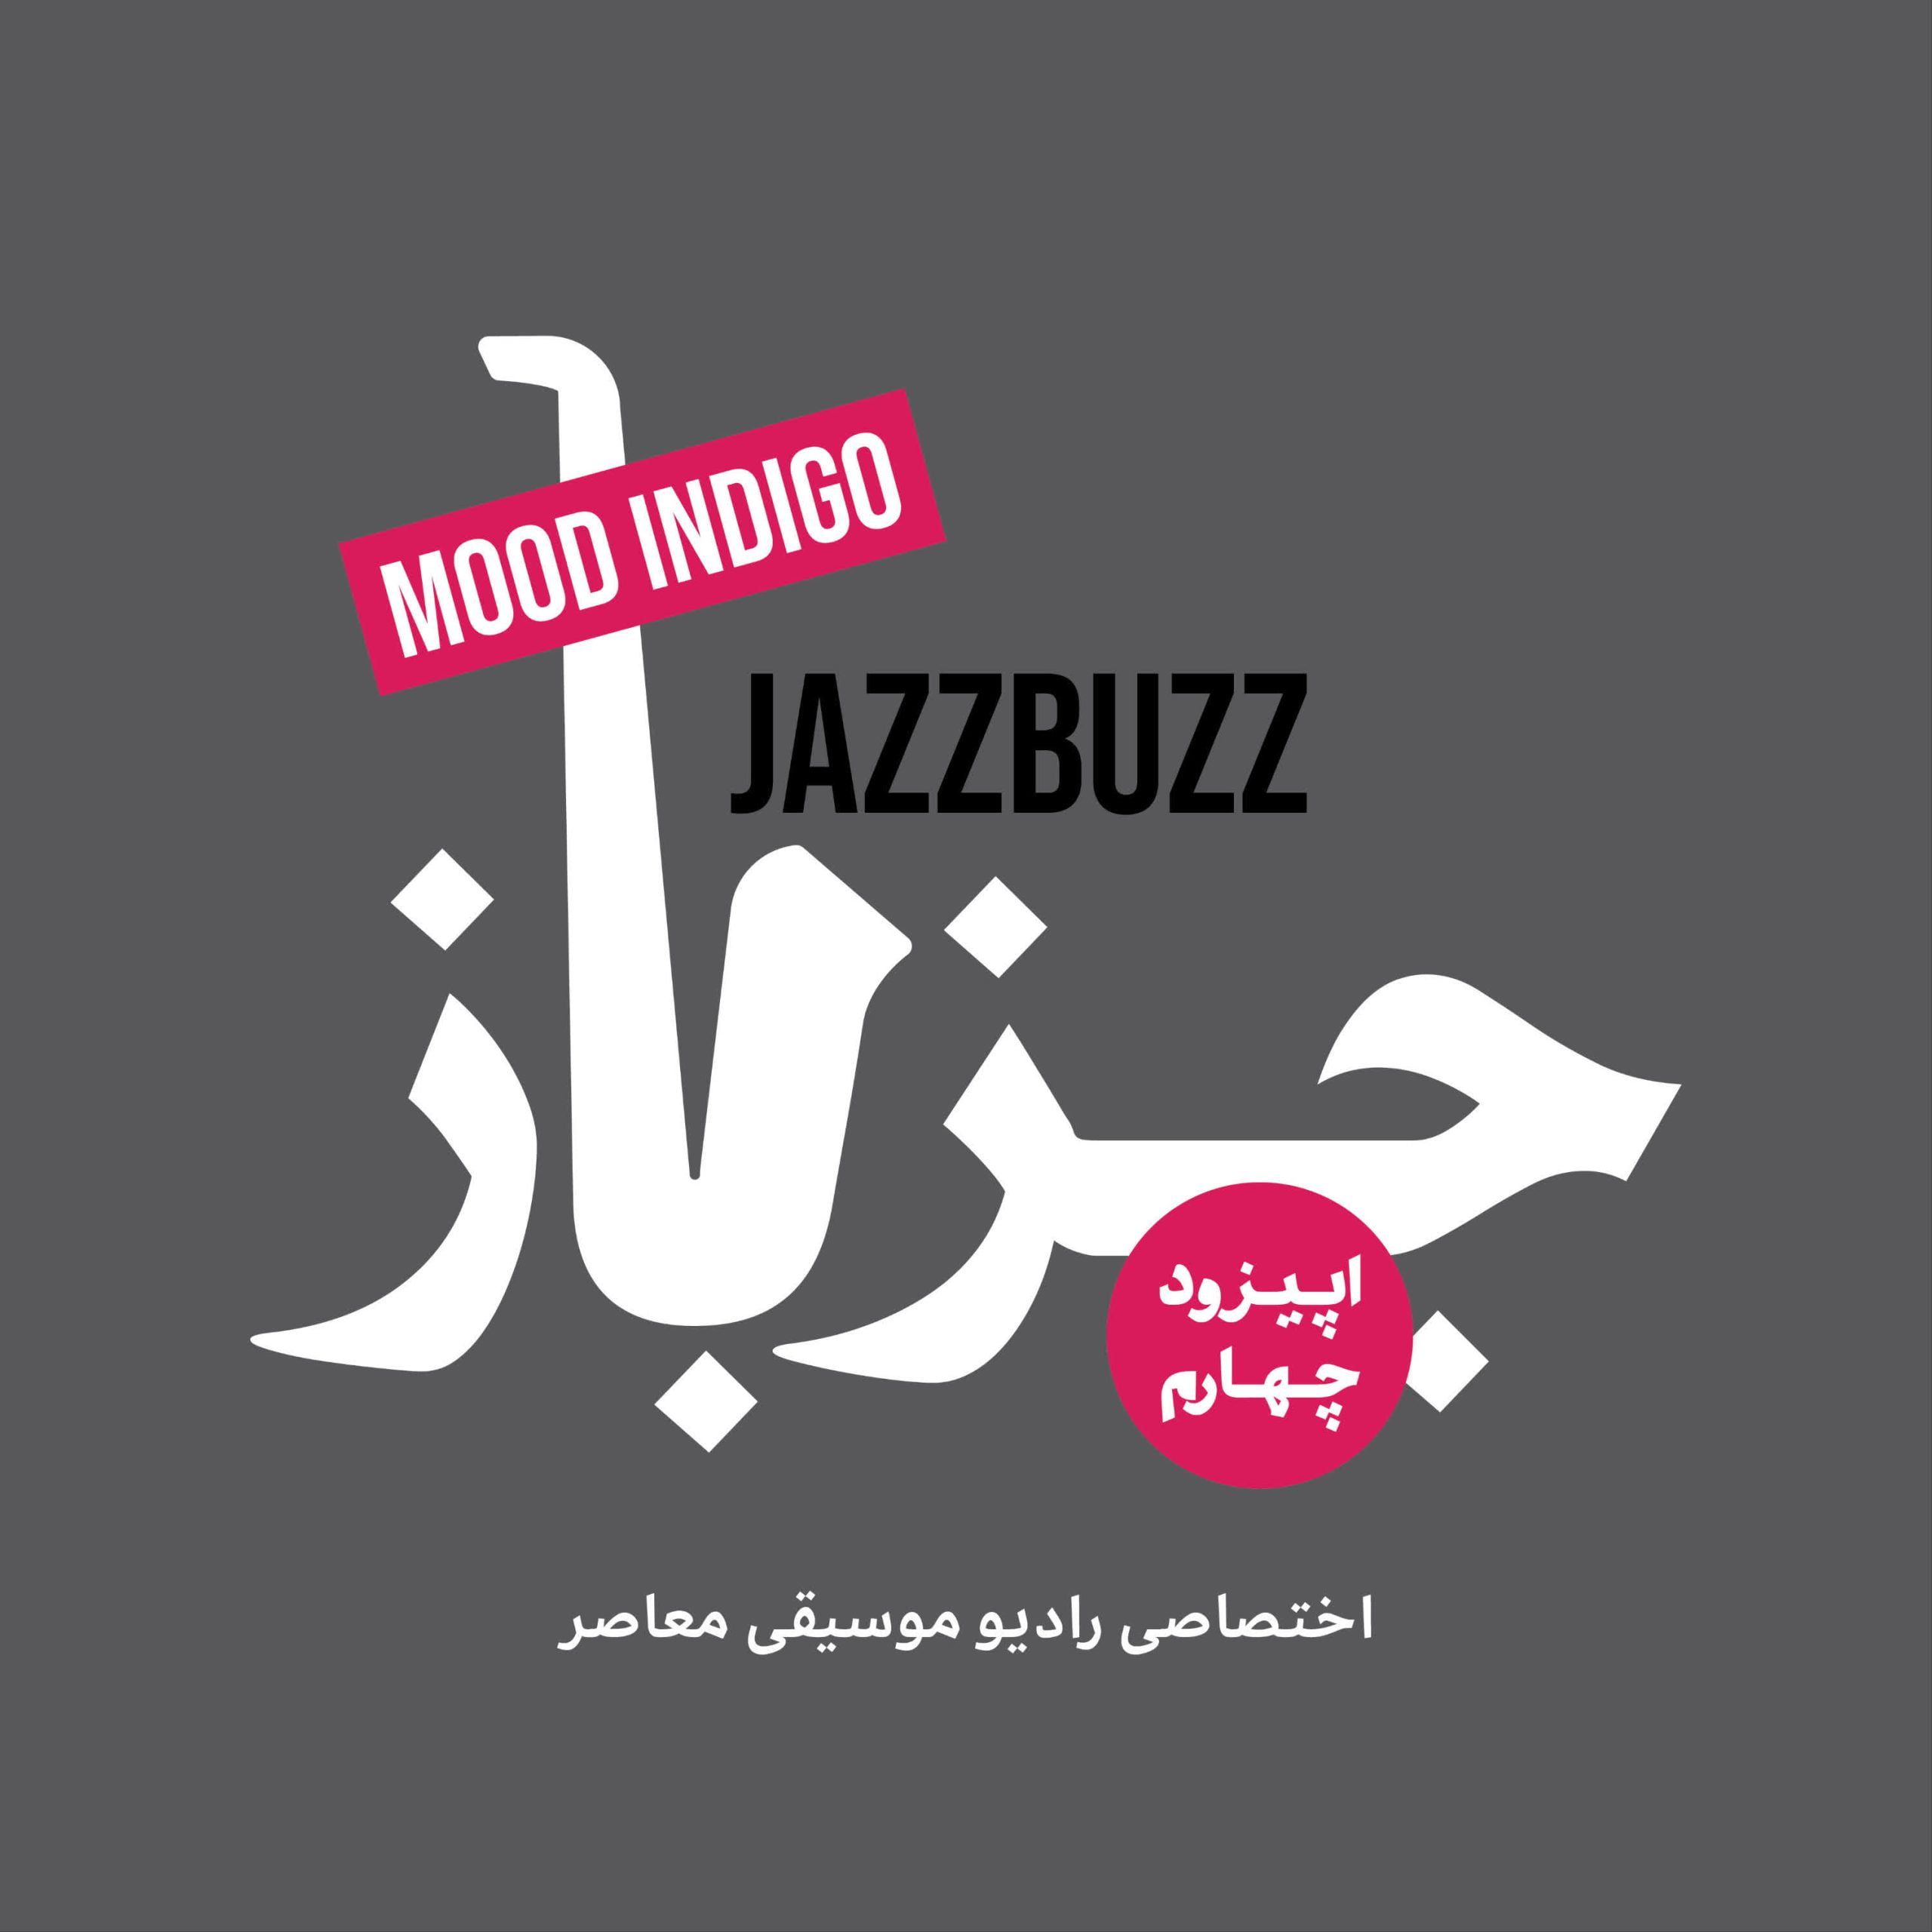 JazzBuzz 04: Mood Indigo